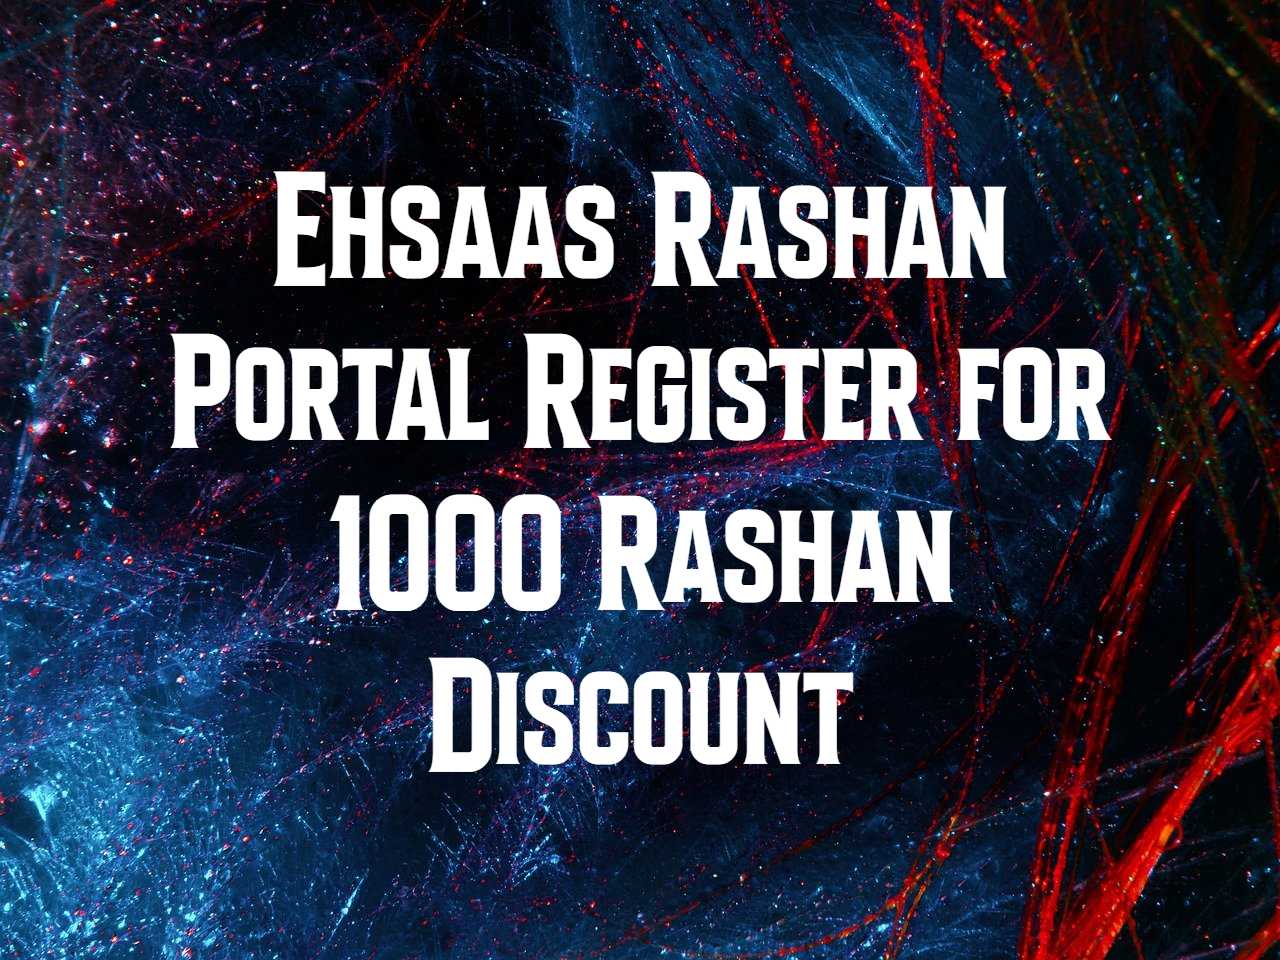 Ehsaas Rashan Portal Register for 1000 Rashan Discount